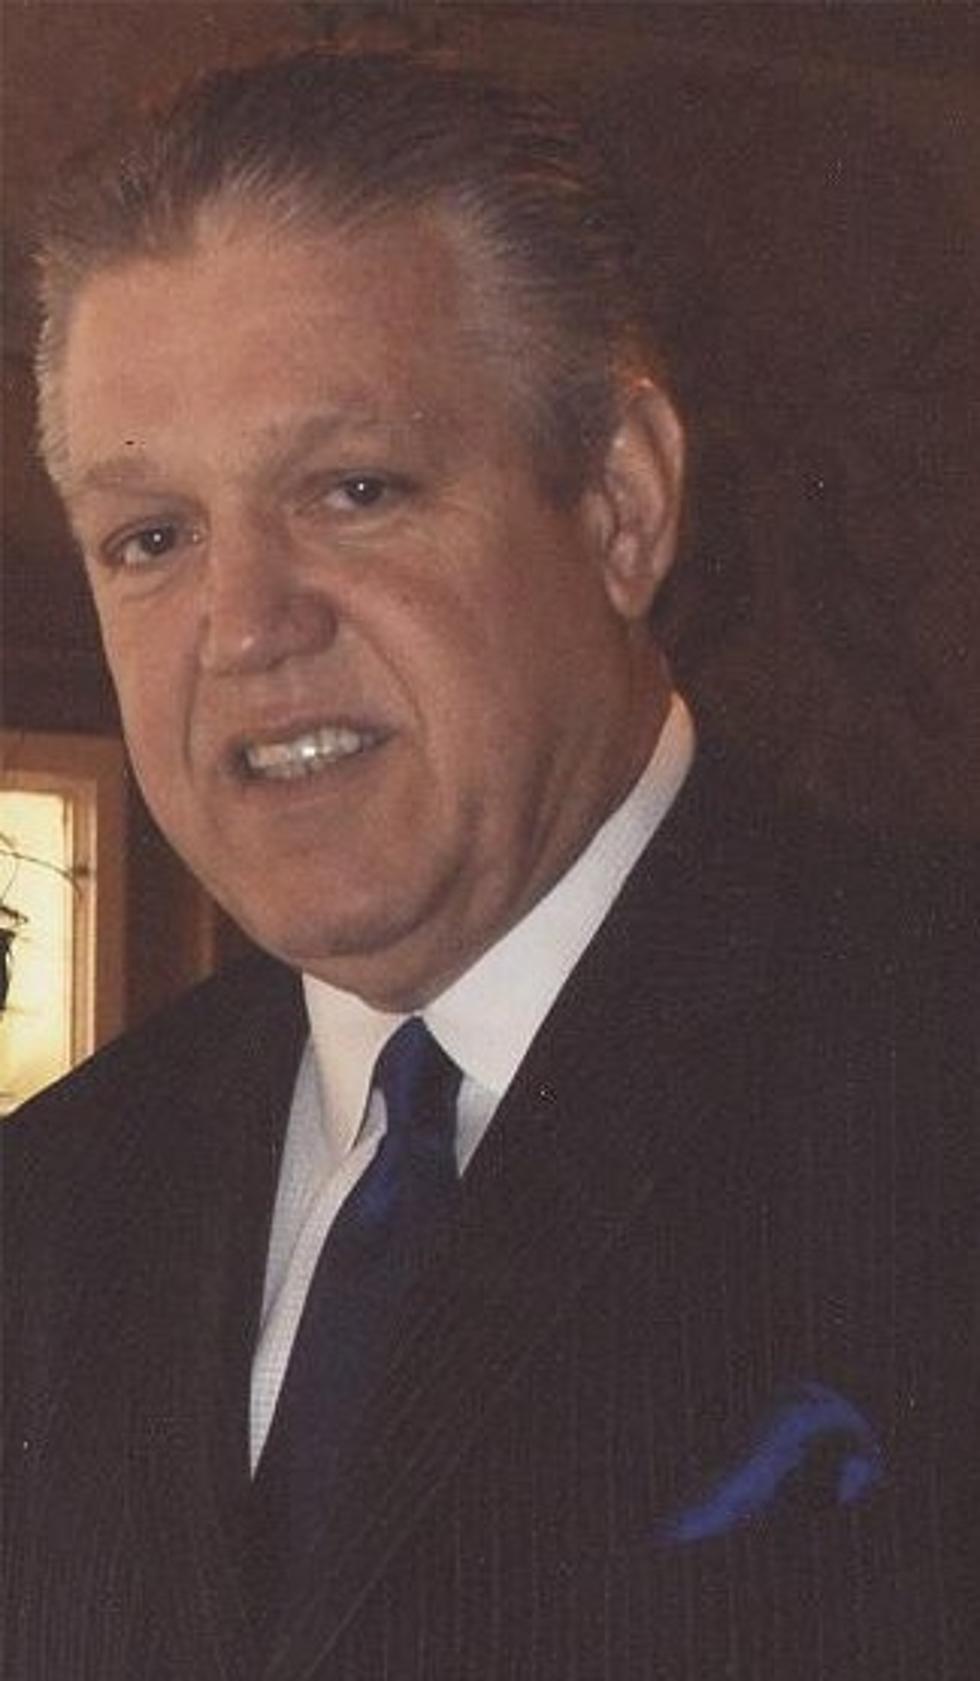 WGNA General Manager Bob Ausfeld Retires